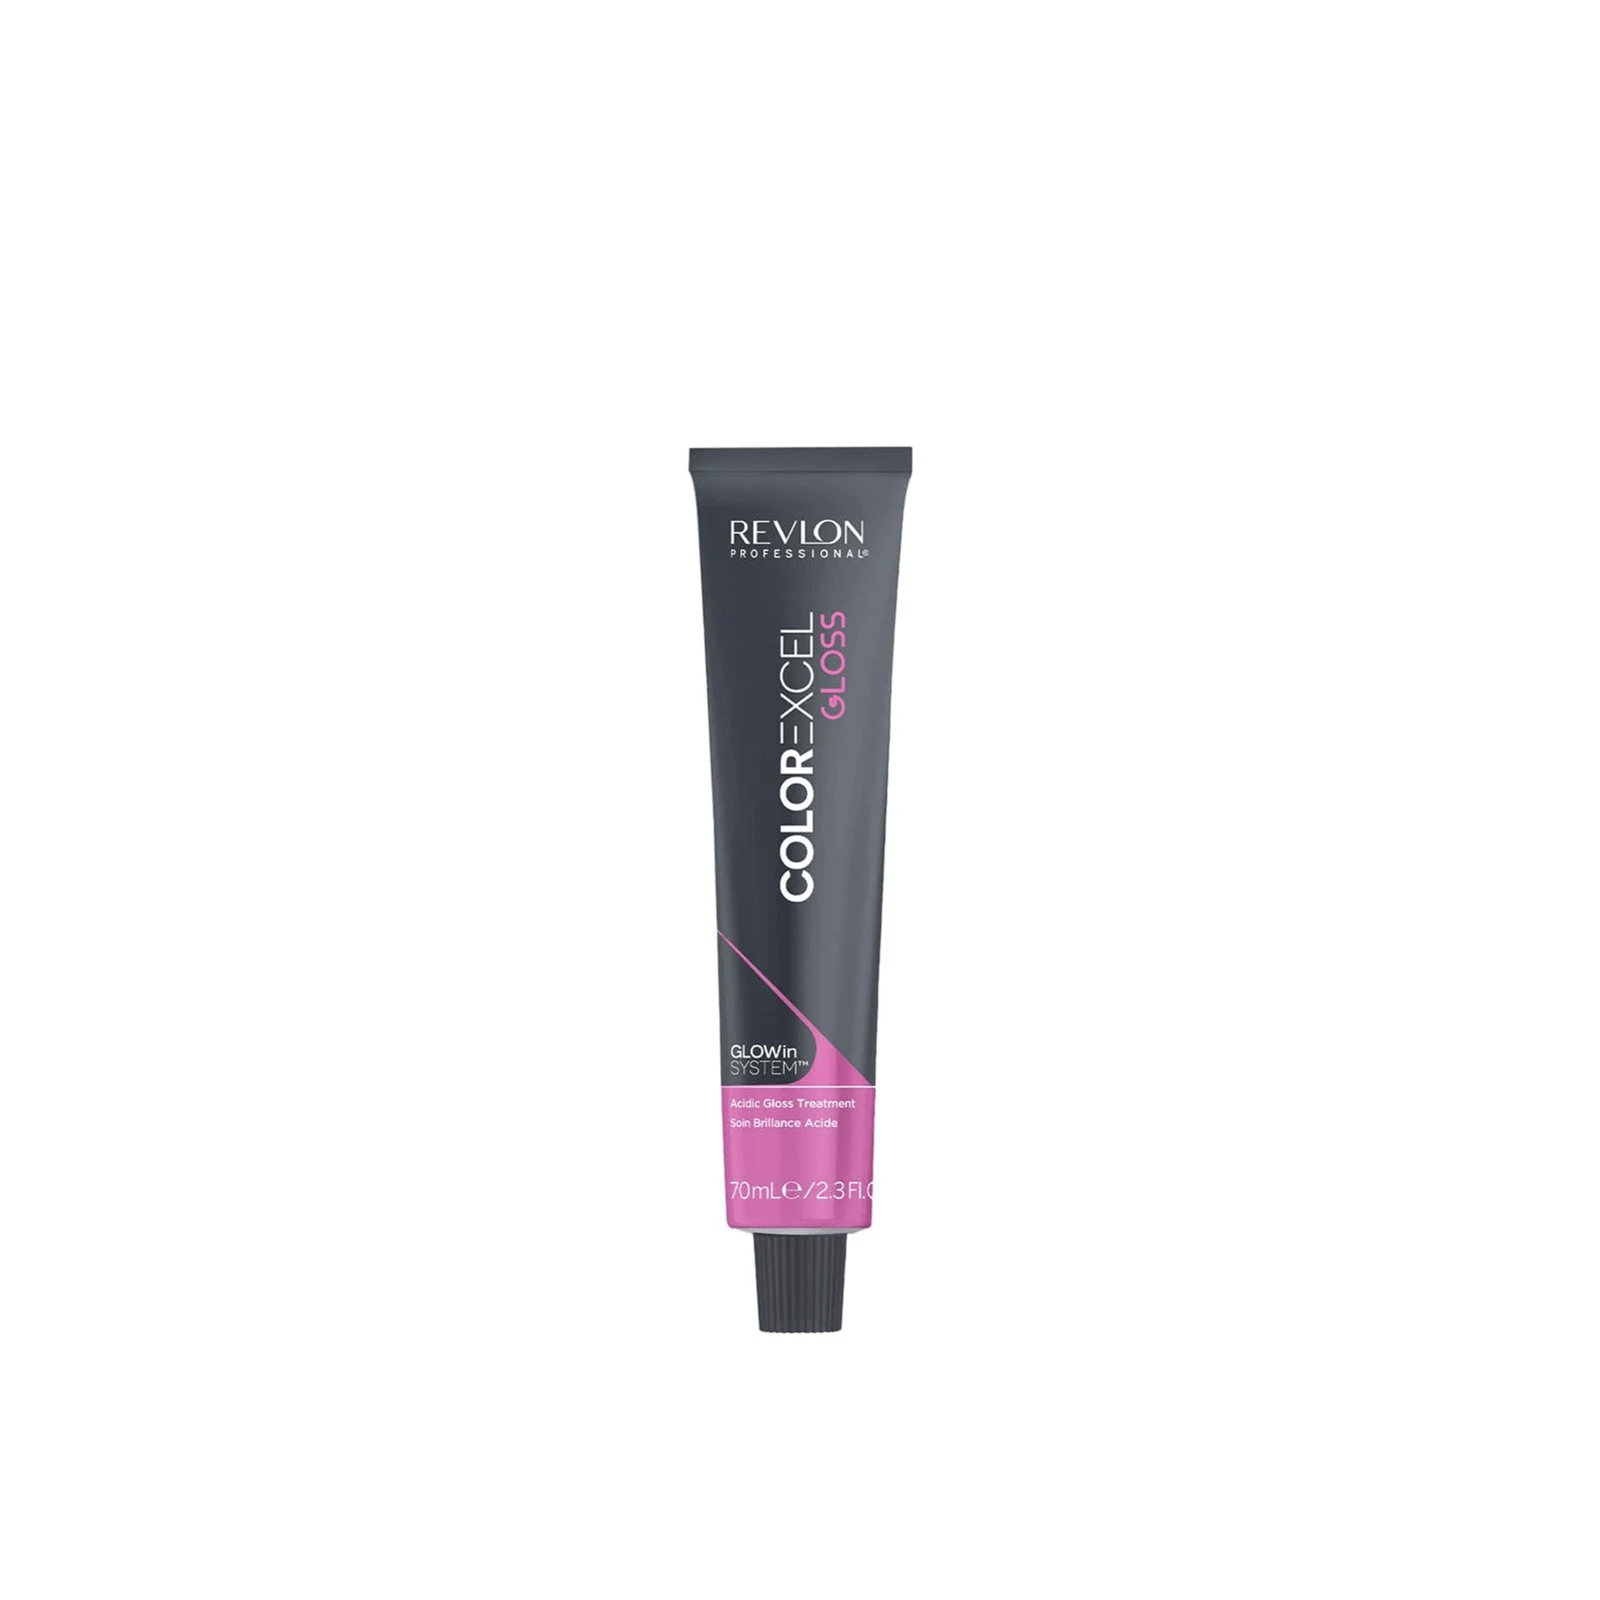 Revlon Professional Color Excel Gloss Acidic Gloss Treatment Demi-Permanent Hair Dye 10.1 Moonlight 70ml